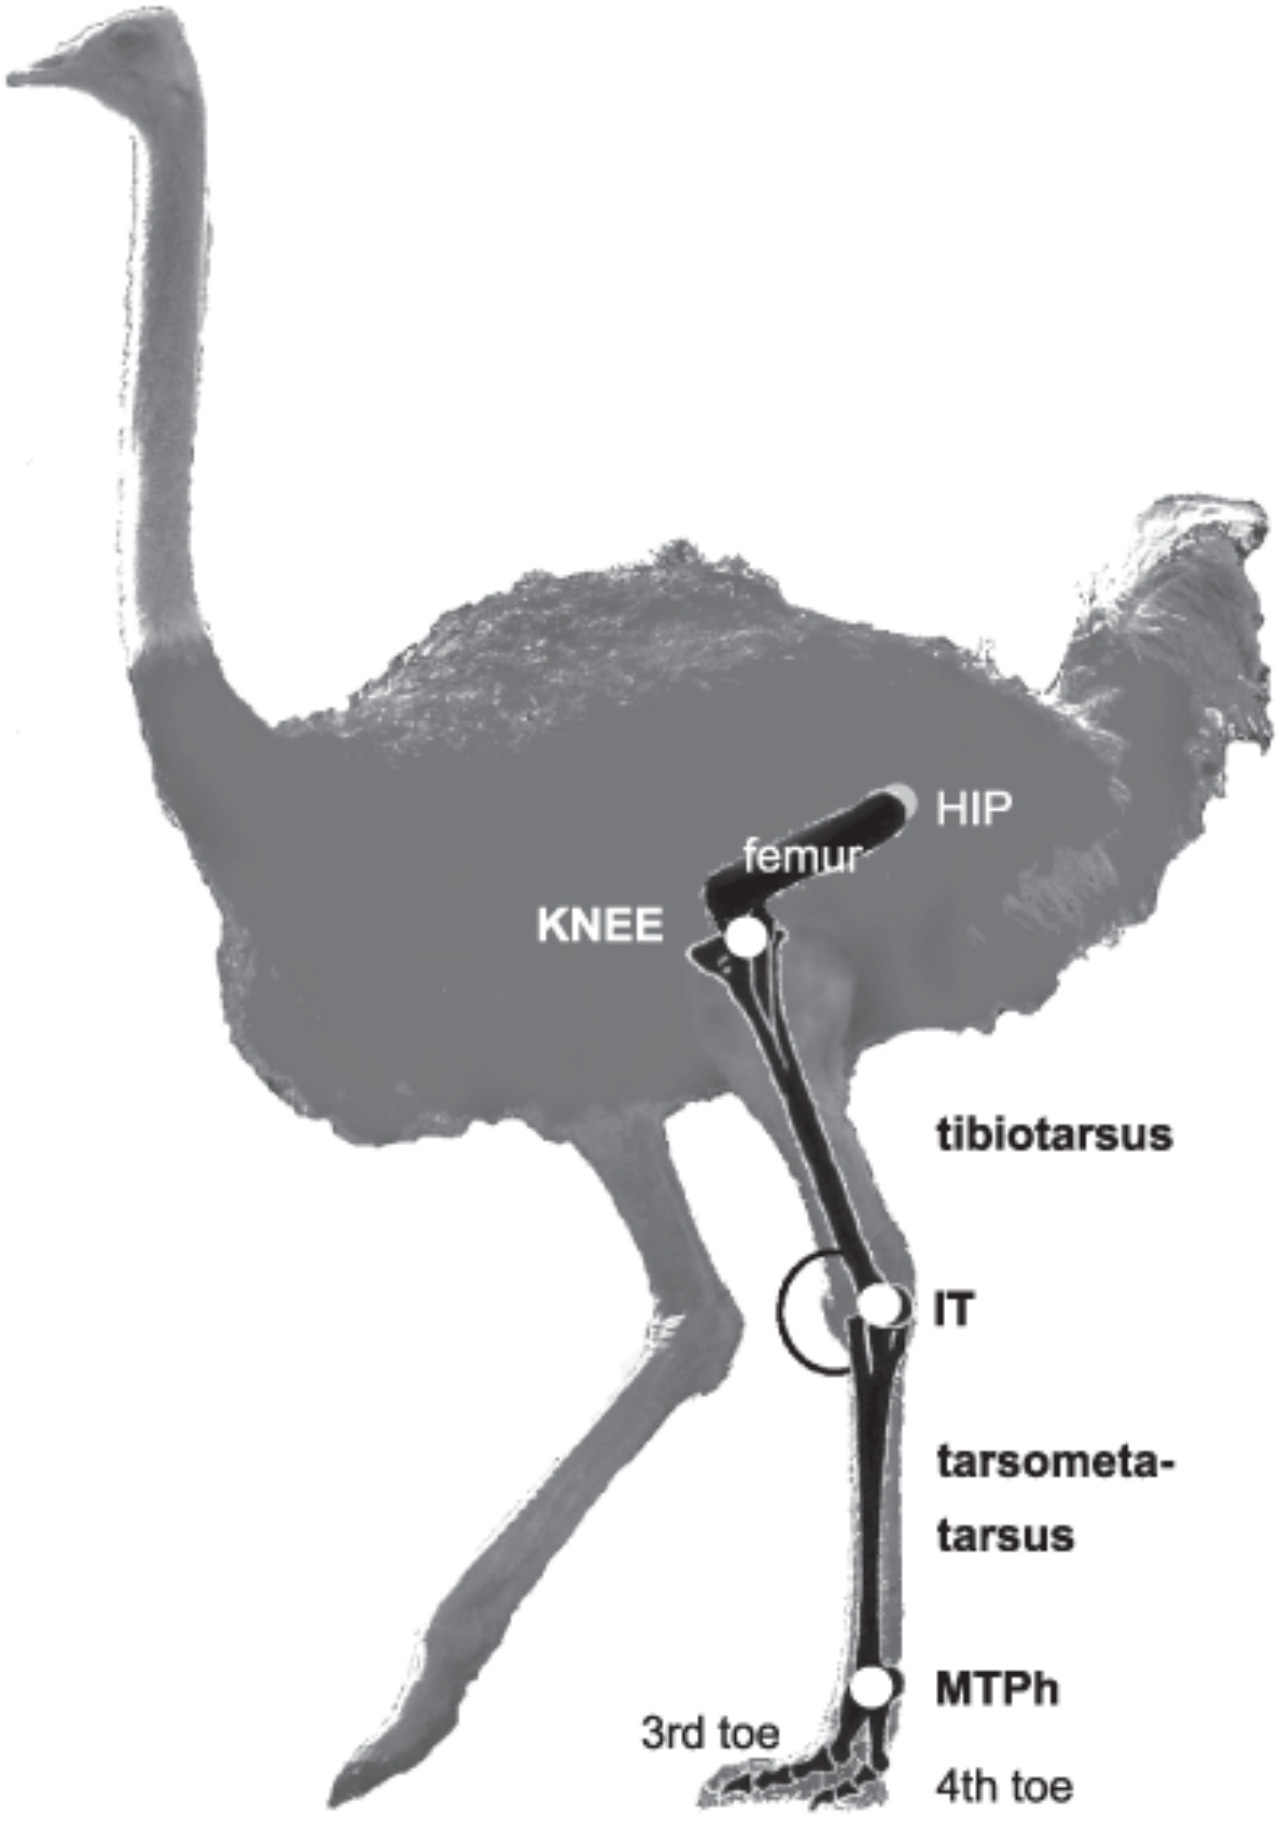 Lightweight crutch concept takes inspiration from a flightless but fast bird